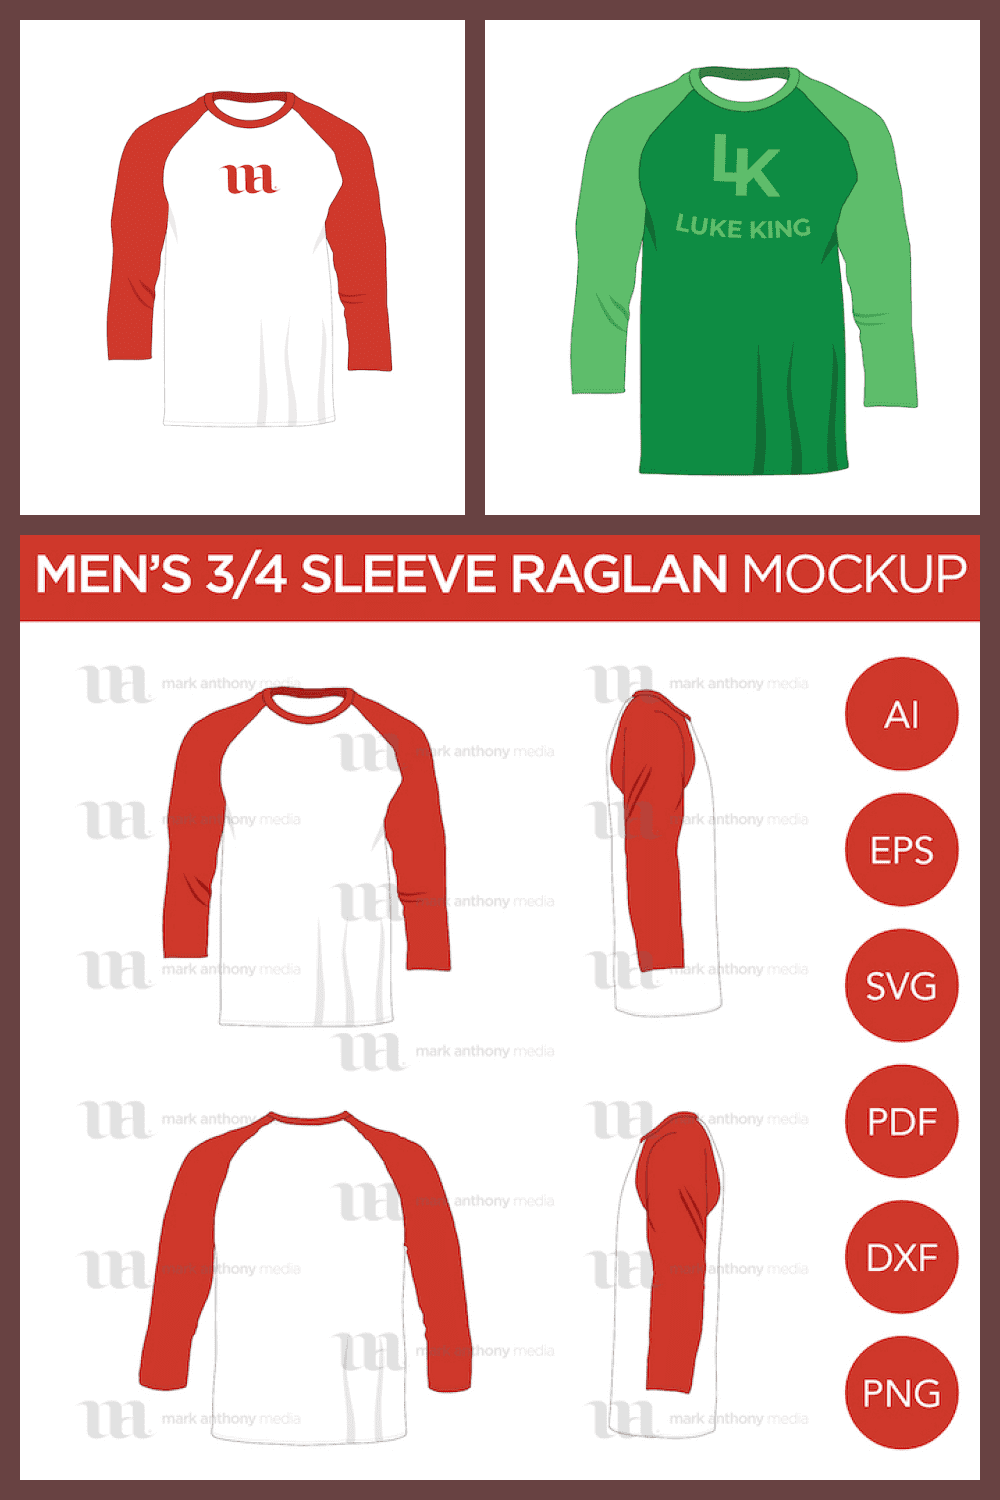 Raglan Men's 3/4 Sleeve Shirt - Vector Mockup Template - MasterBundles - Pinterest Collage Image.